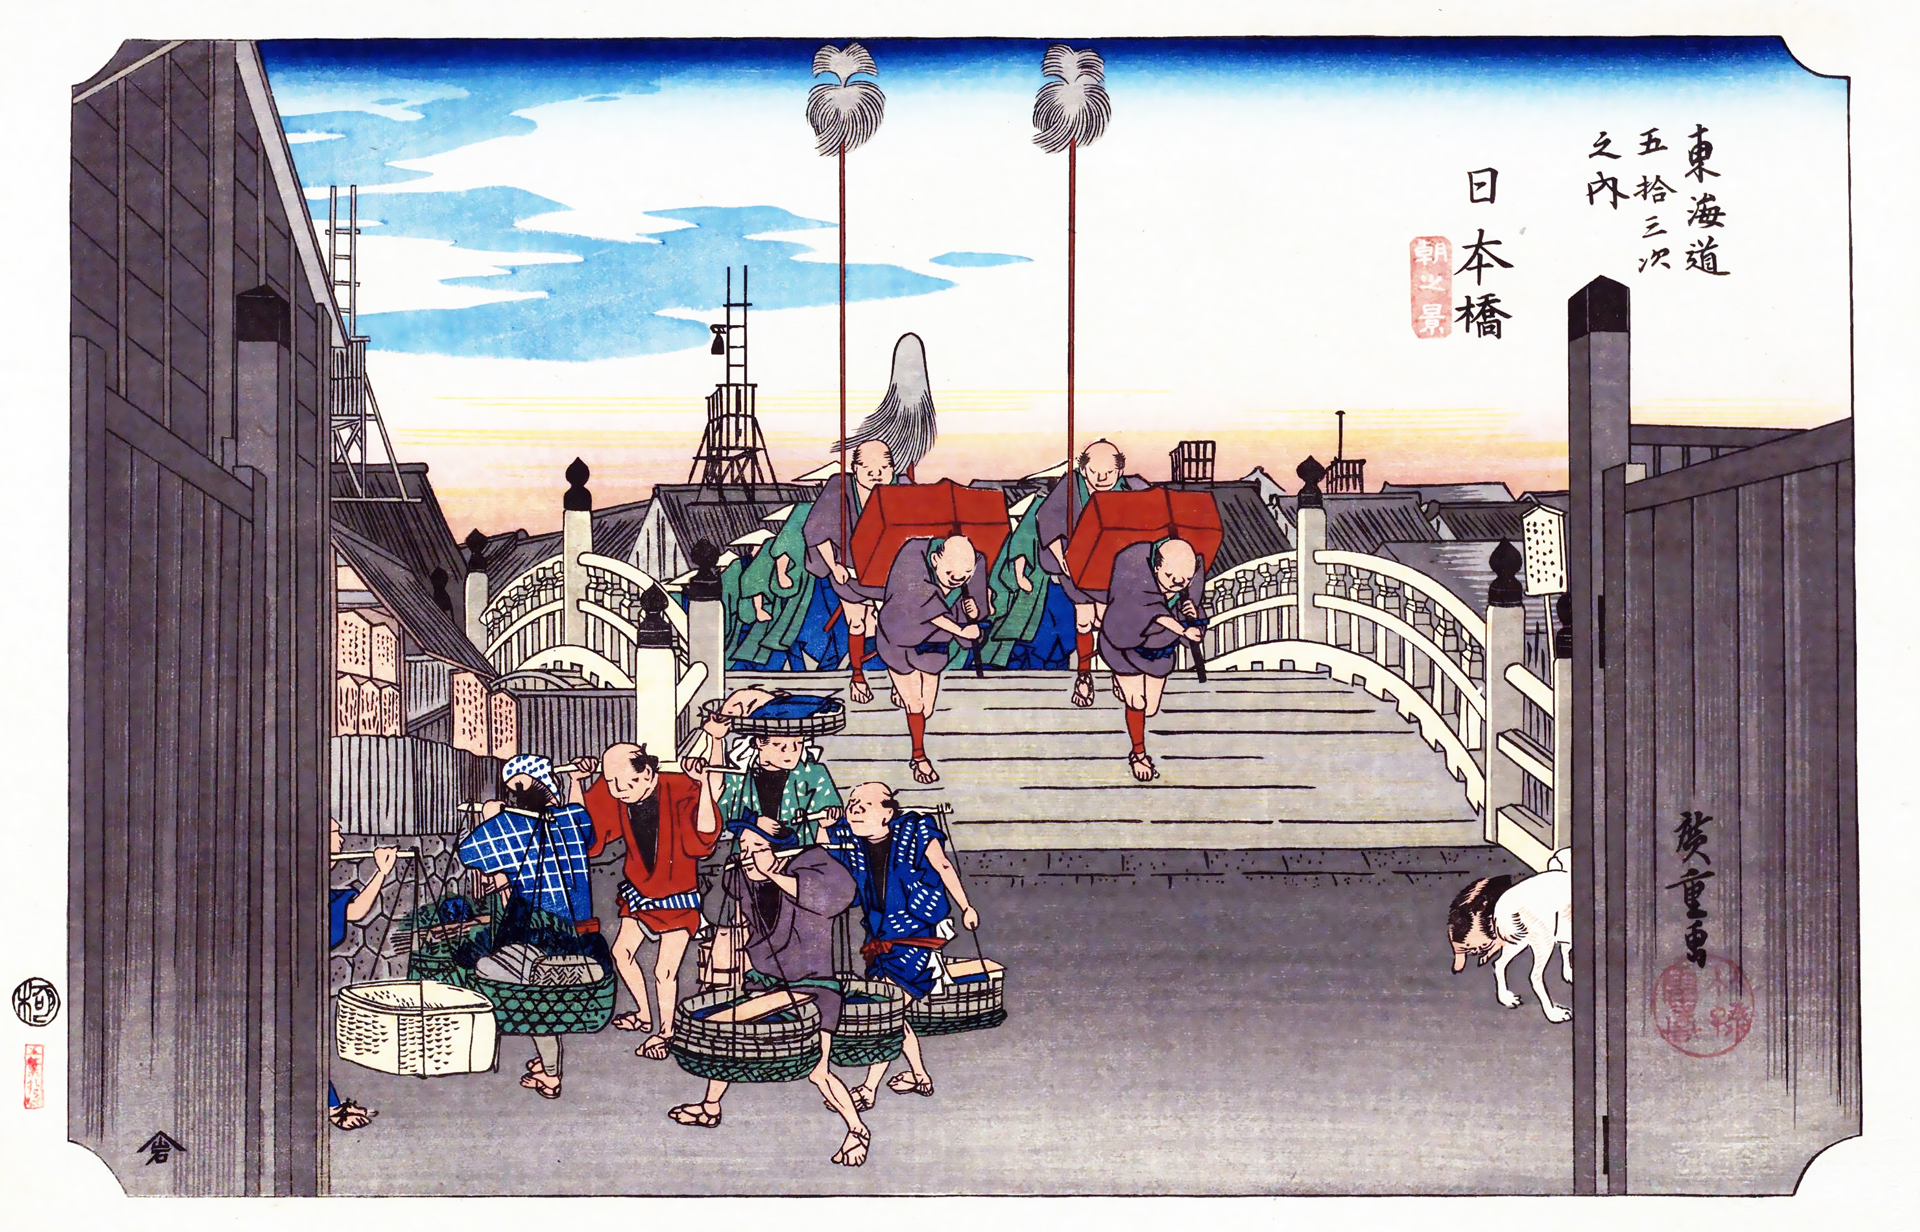 東海道五拾三次 日本橋 朝之景 歌川広重 壁紙画像 ミヤノーヴァ